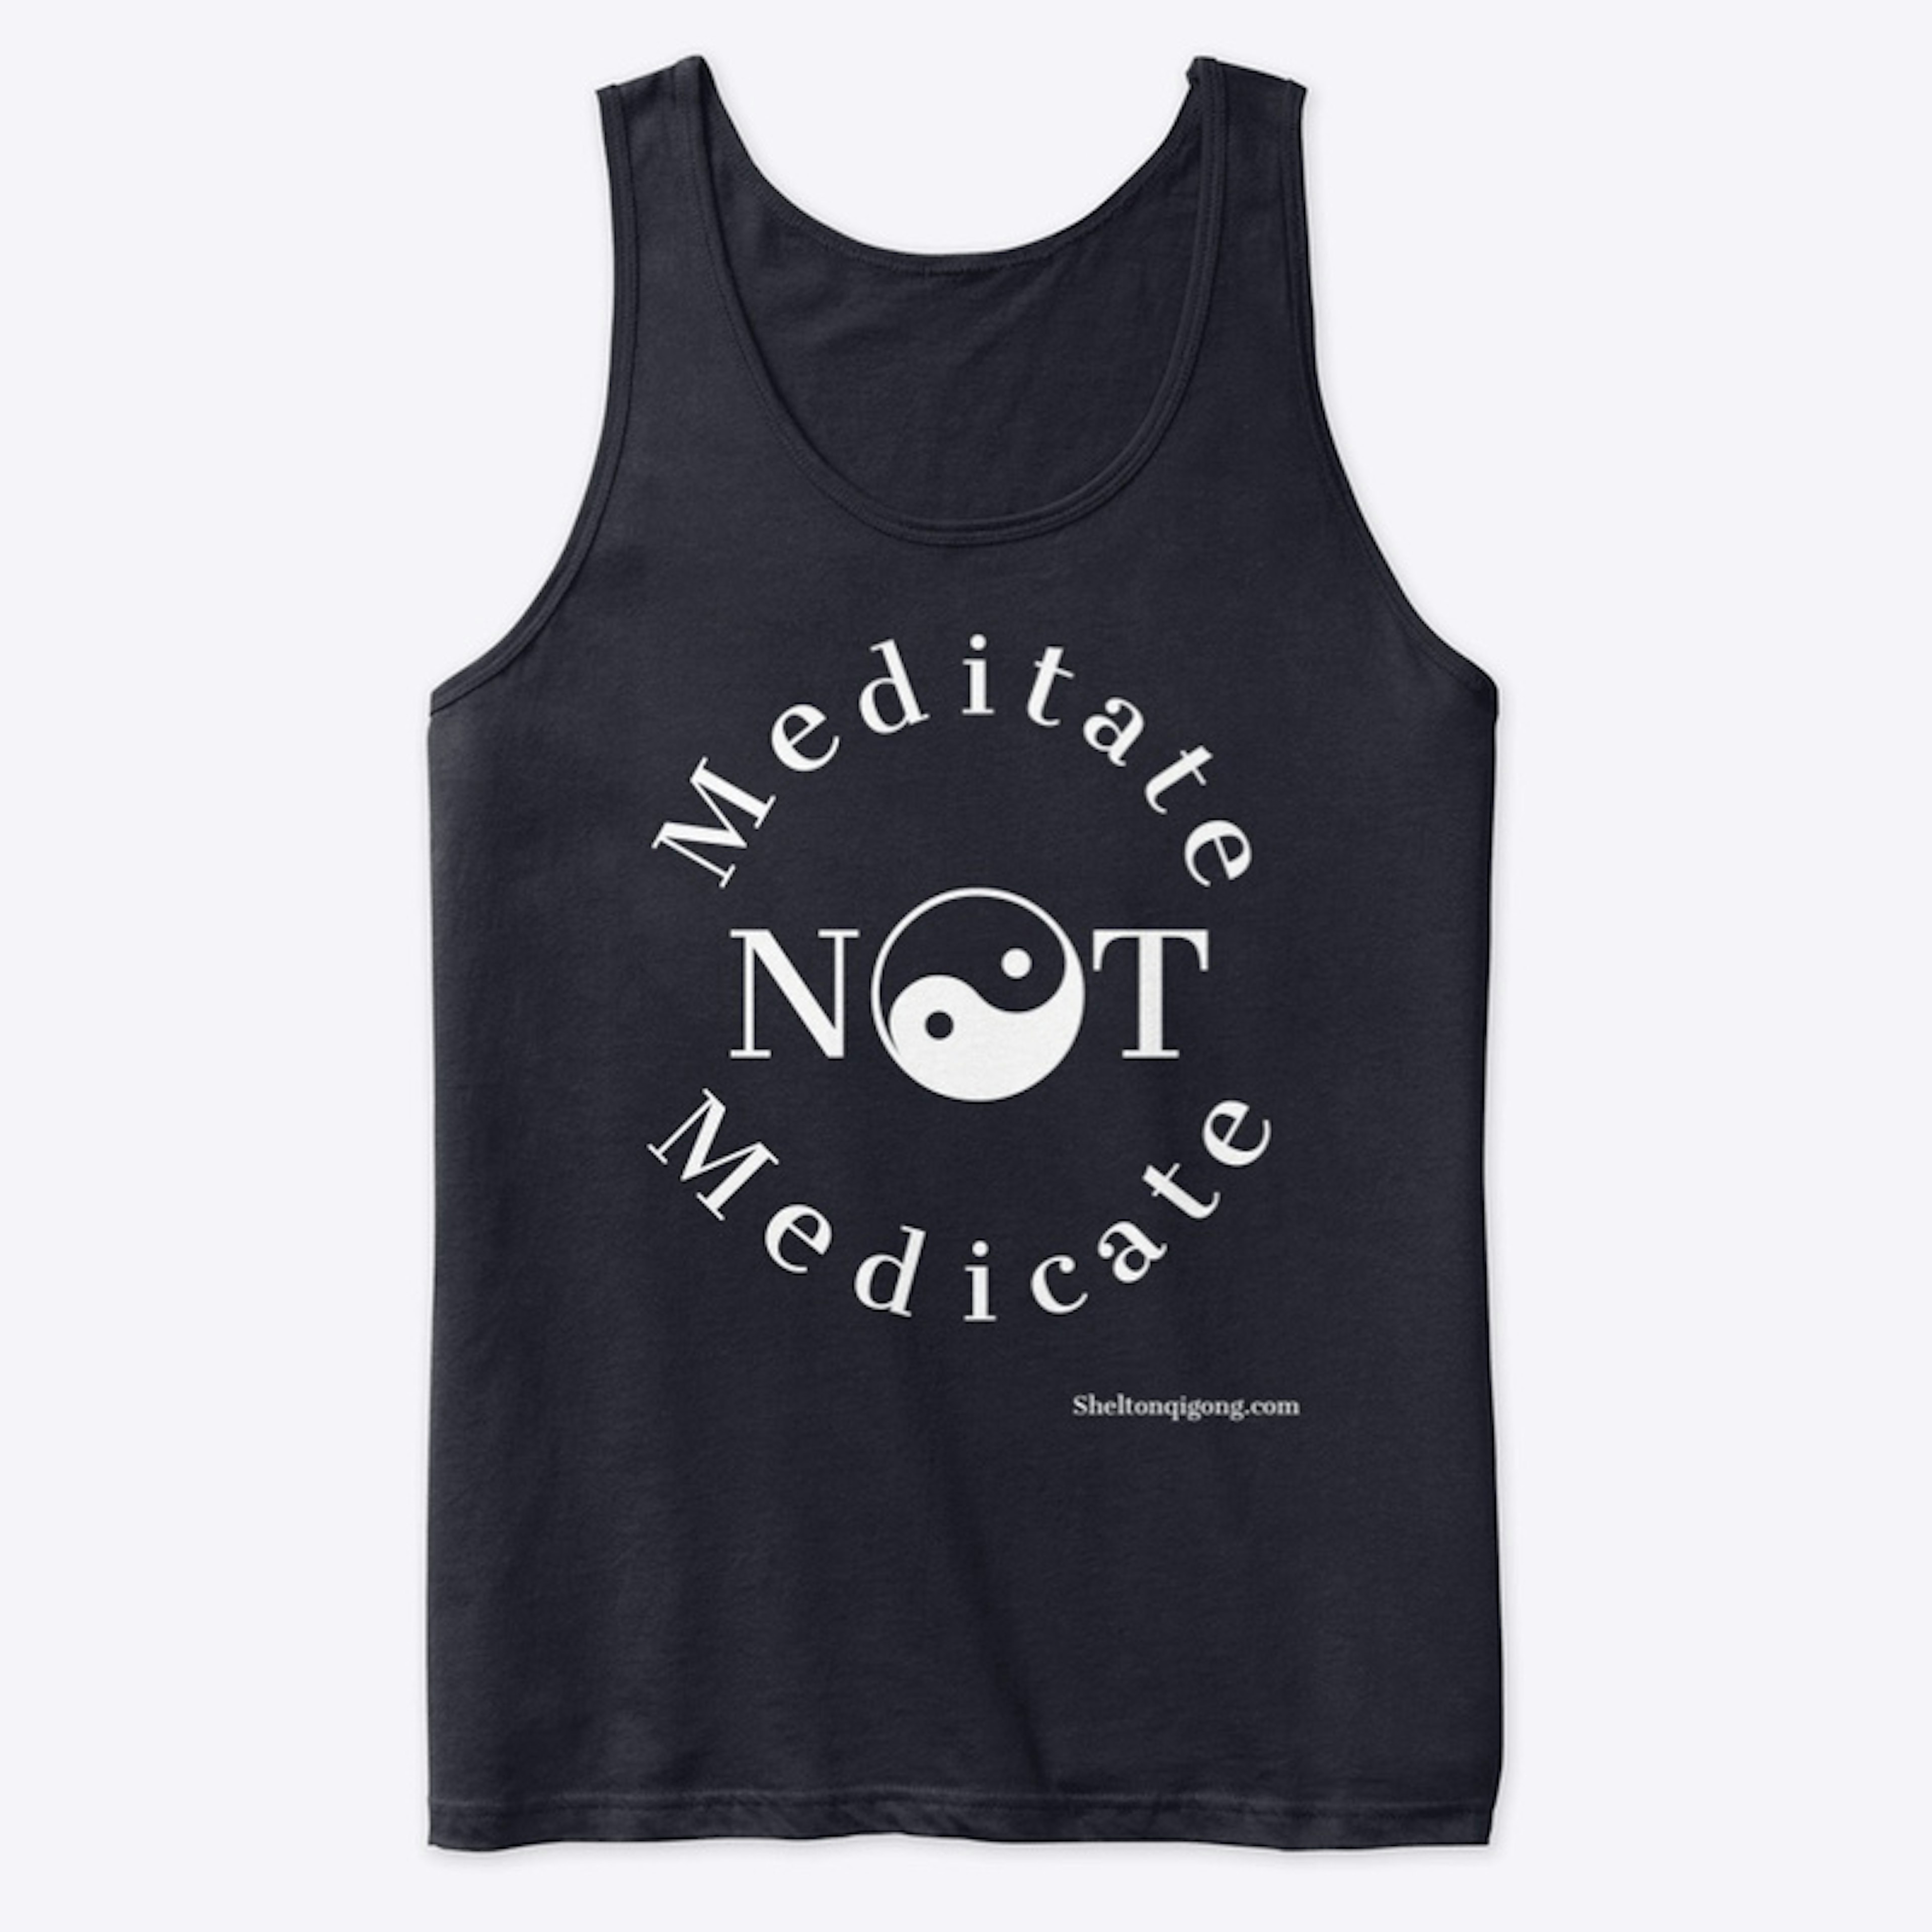 Meditate Not Medicate